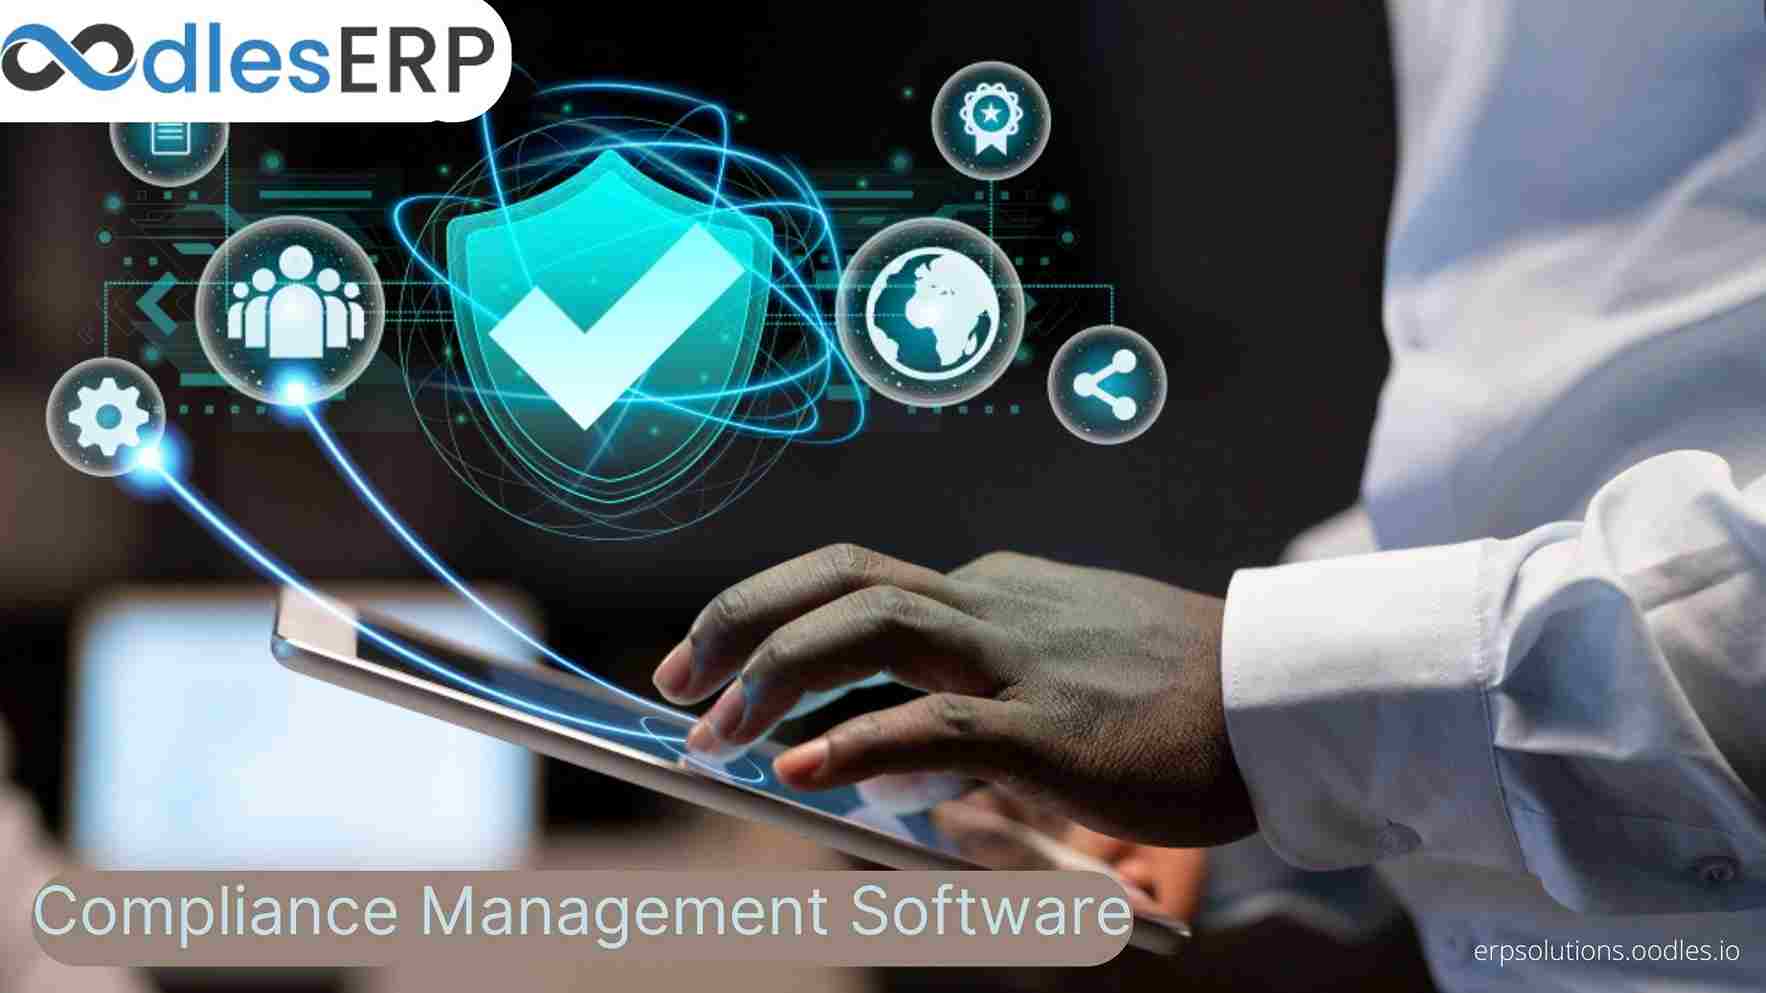 Compliance Management Software Development For Enterprise Risk Management